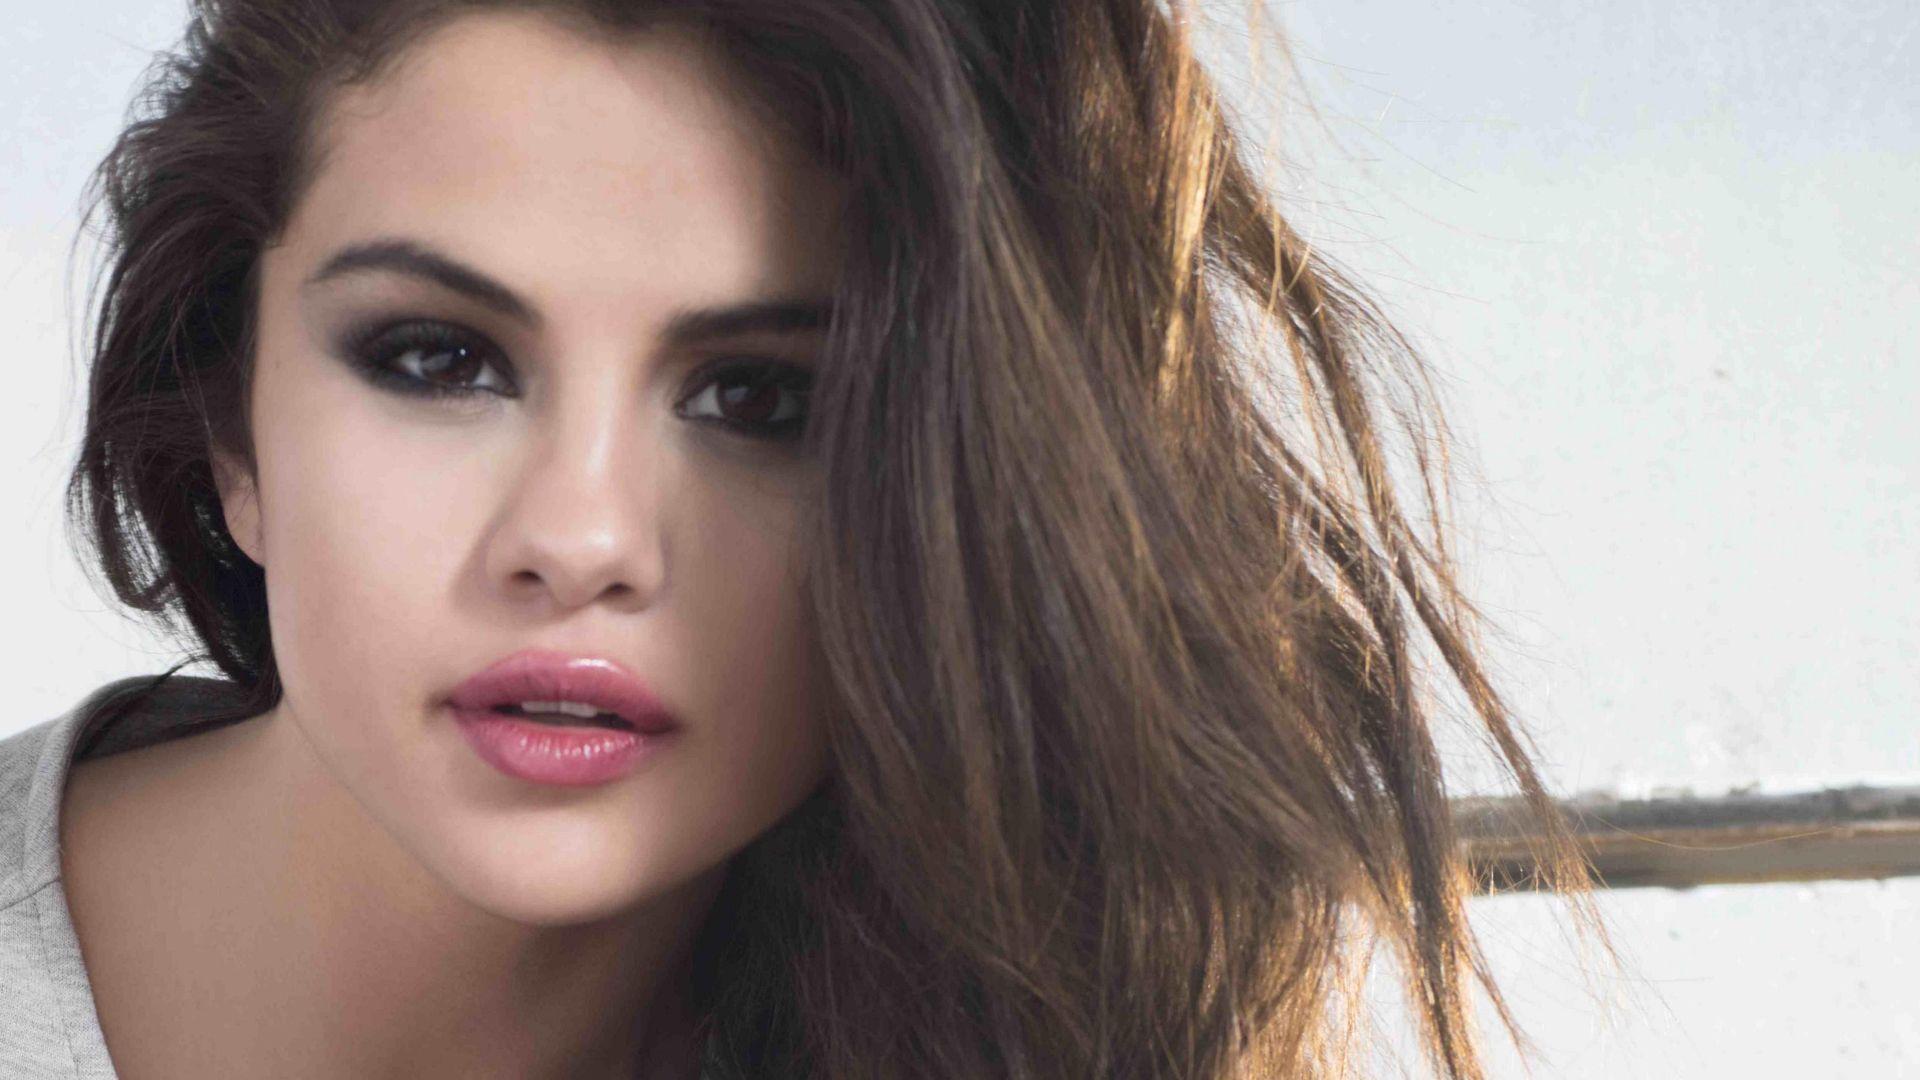 Cute Selena Gomez HD Background. Wallpaper, Background, Image